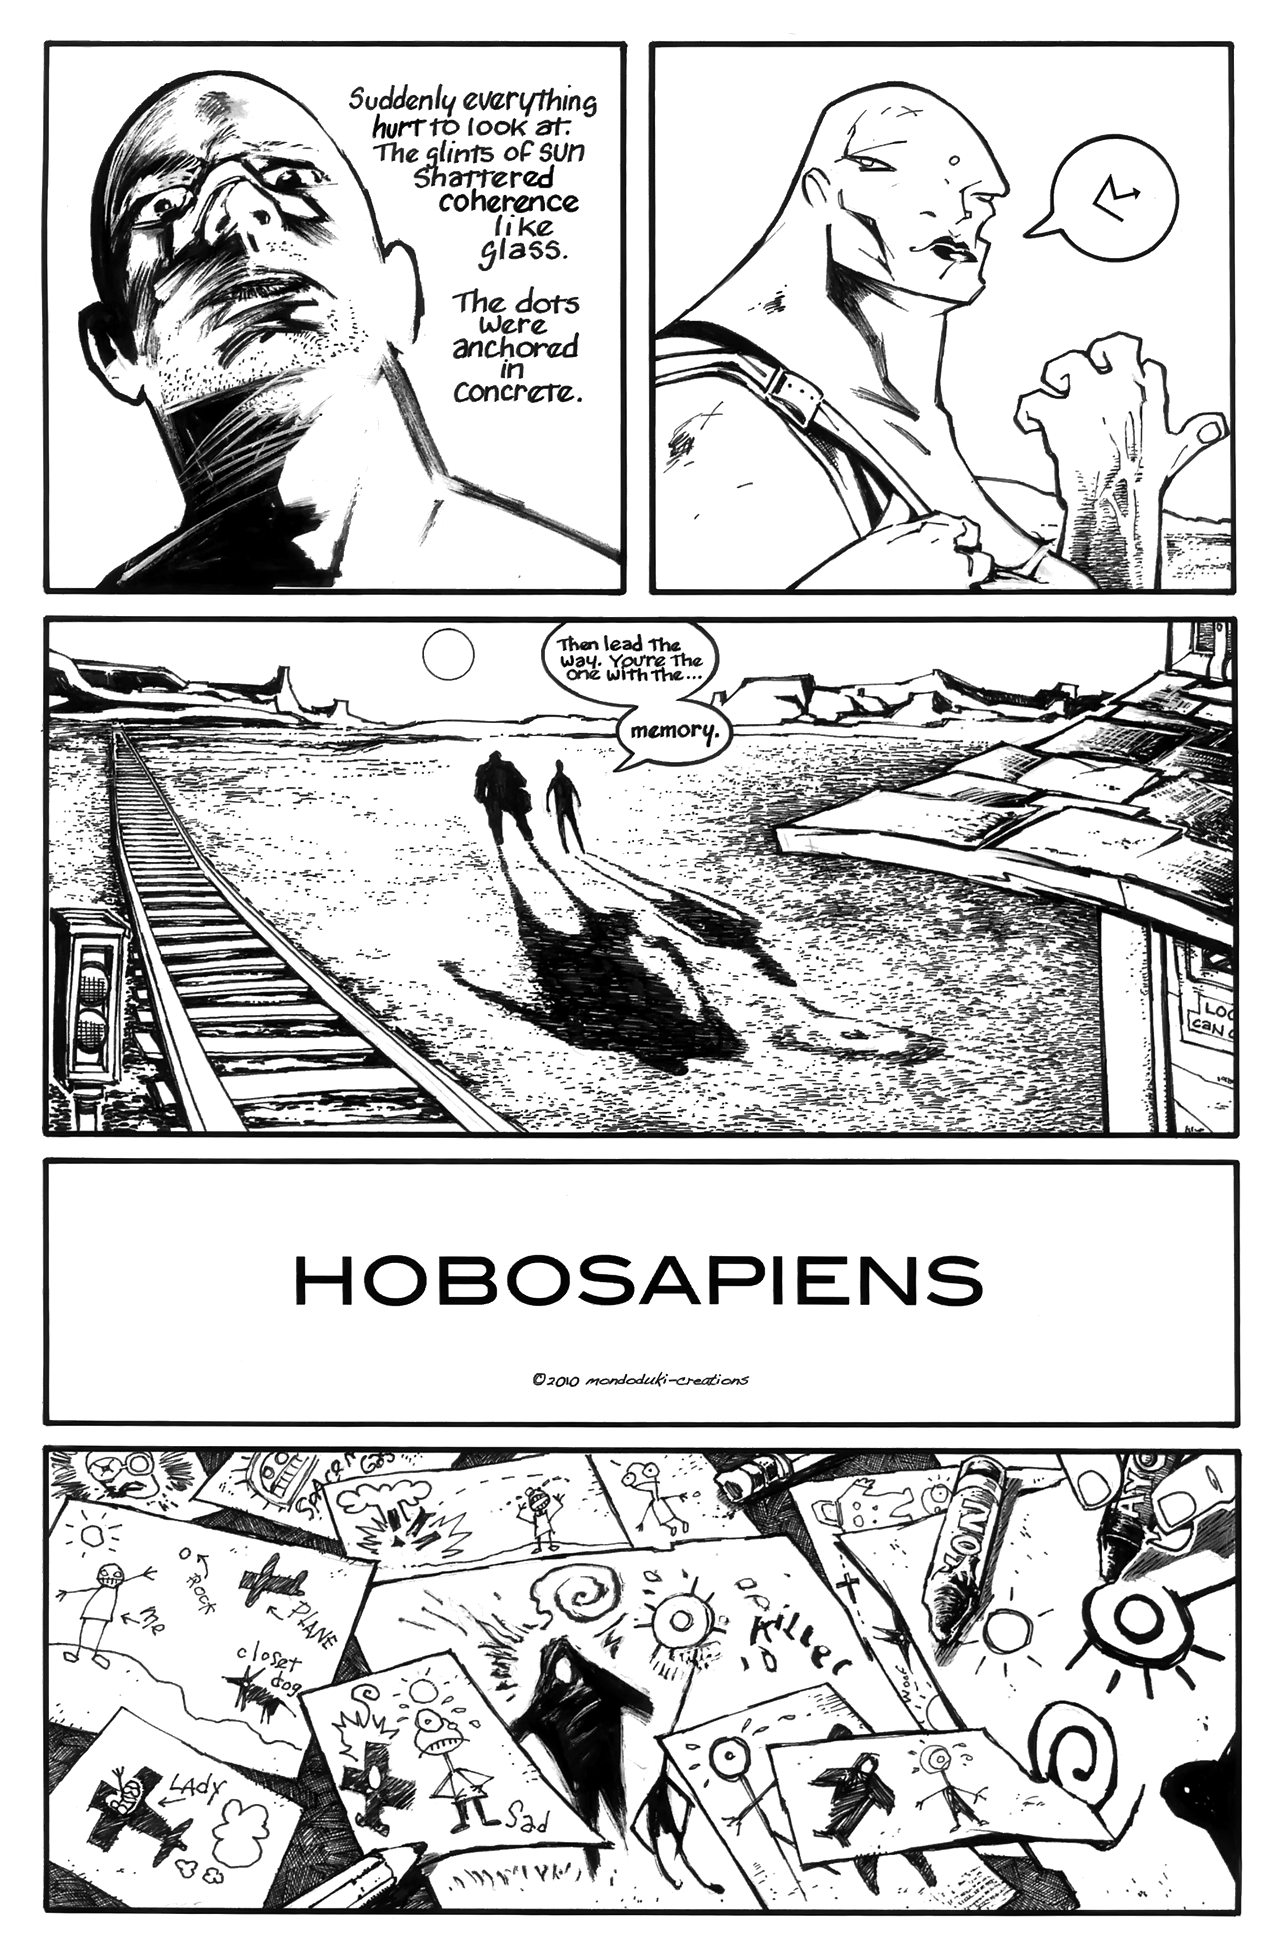 Meta 4 #4 (of 5) - Hobosapiens 